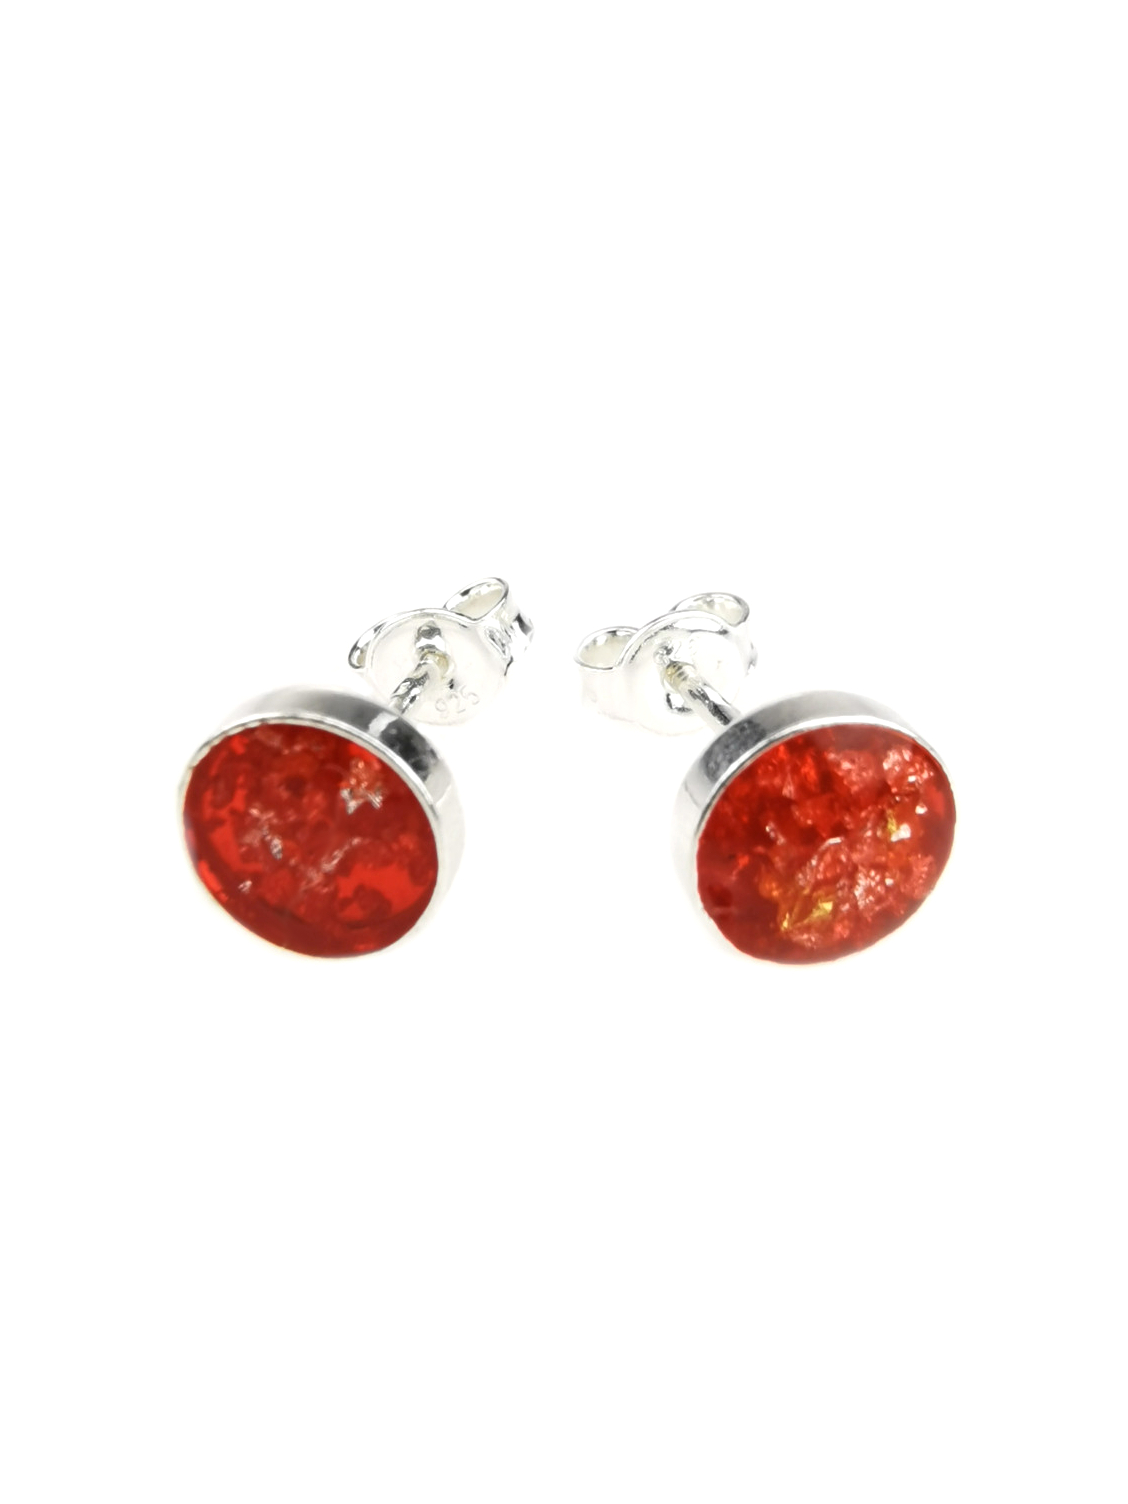 Red Orgone Earrings by OrgoneVibes